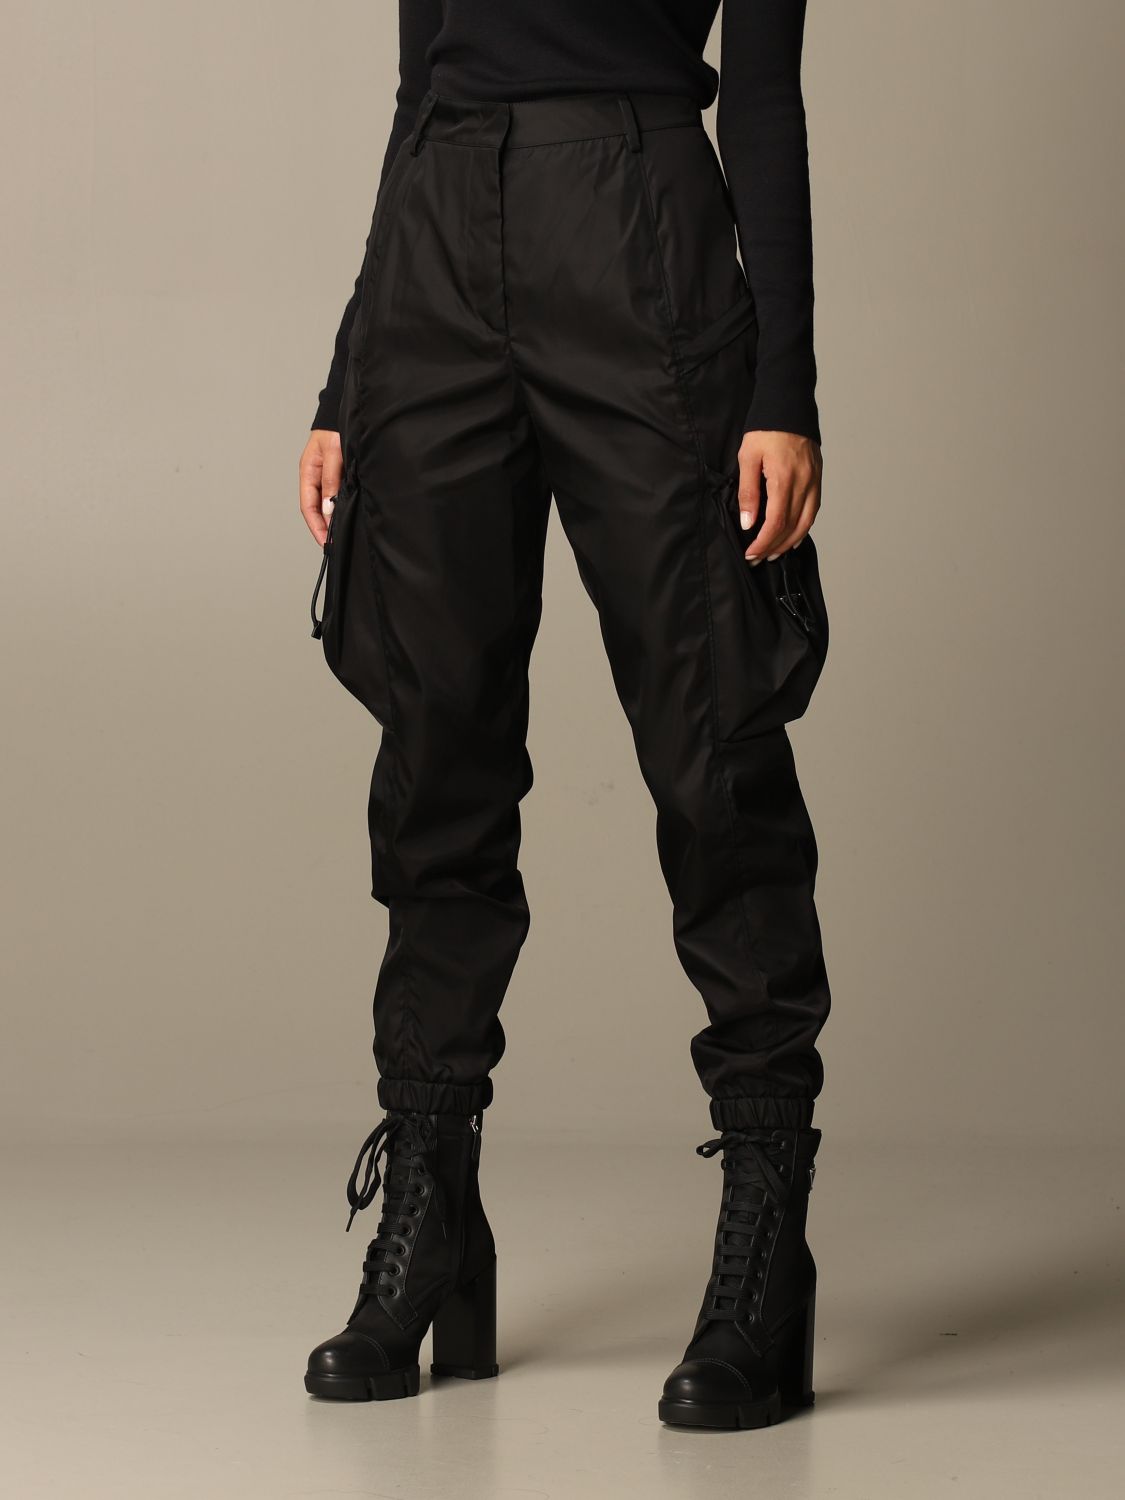 PRADA: nylon trousers with pockets | Pants Prada Women Black | Pants